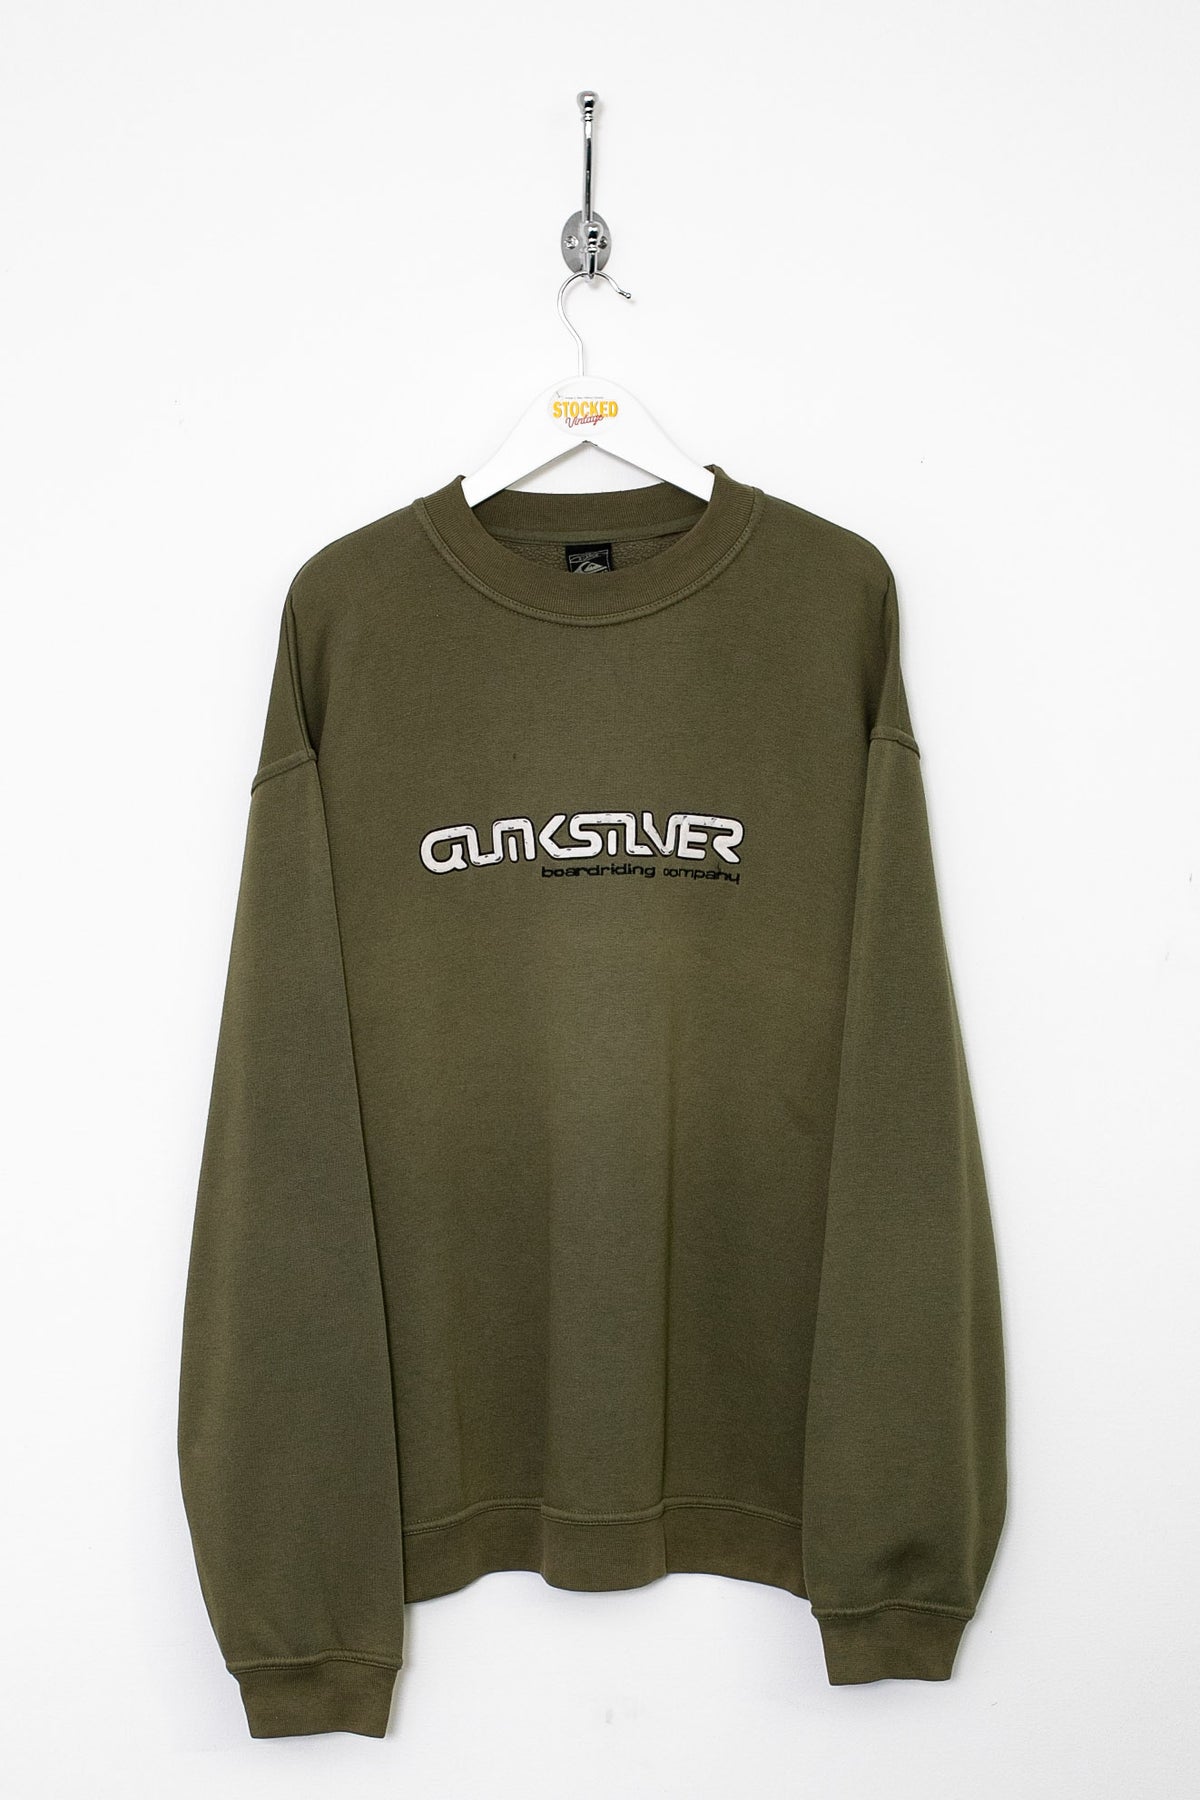 00s Quicksilver Sweatshirt (XL)